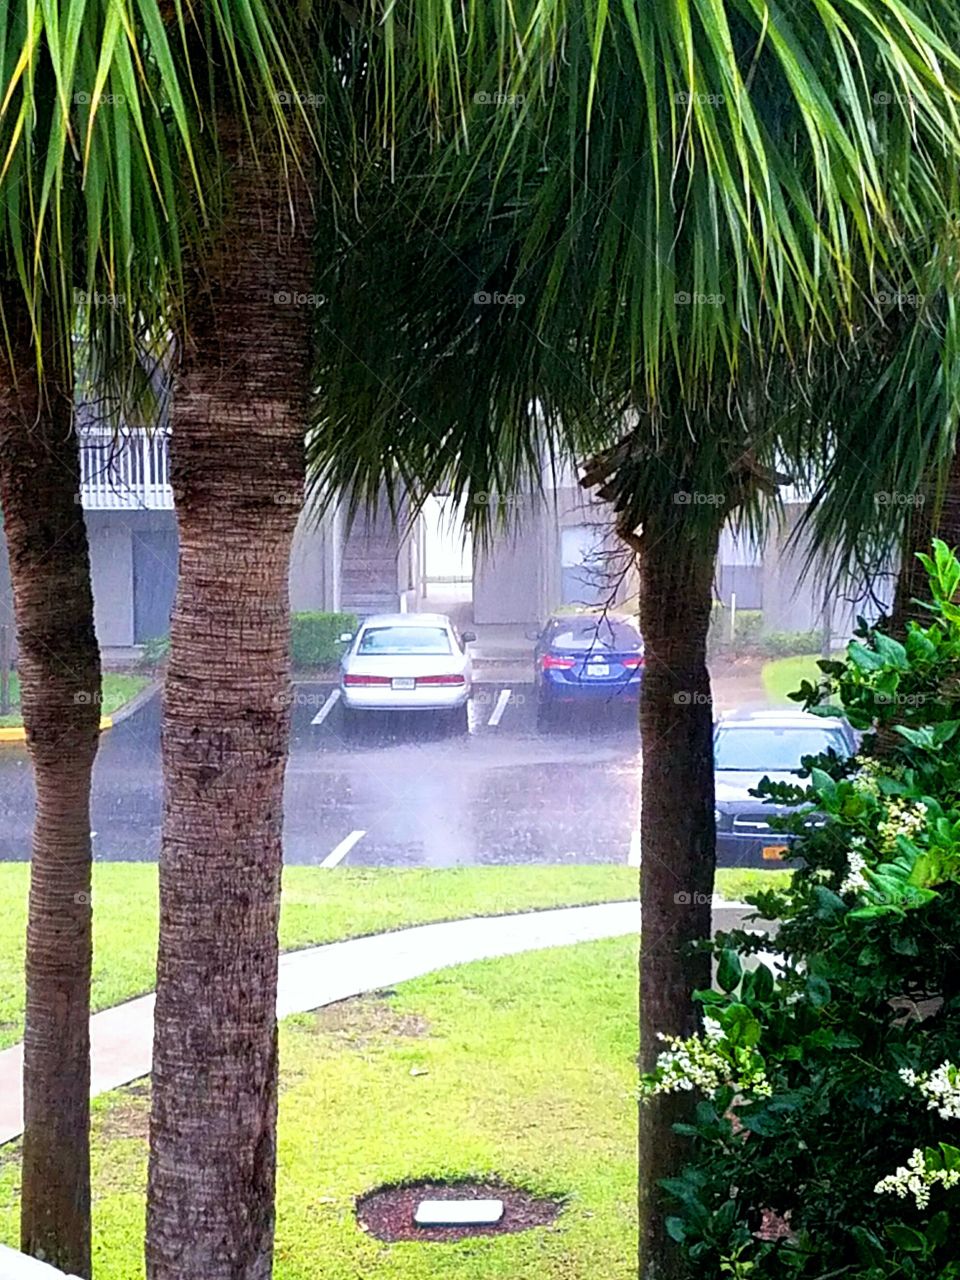 Florida pop-up rain shower